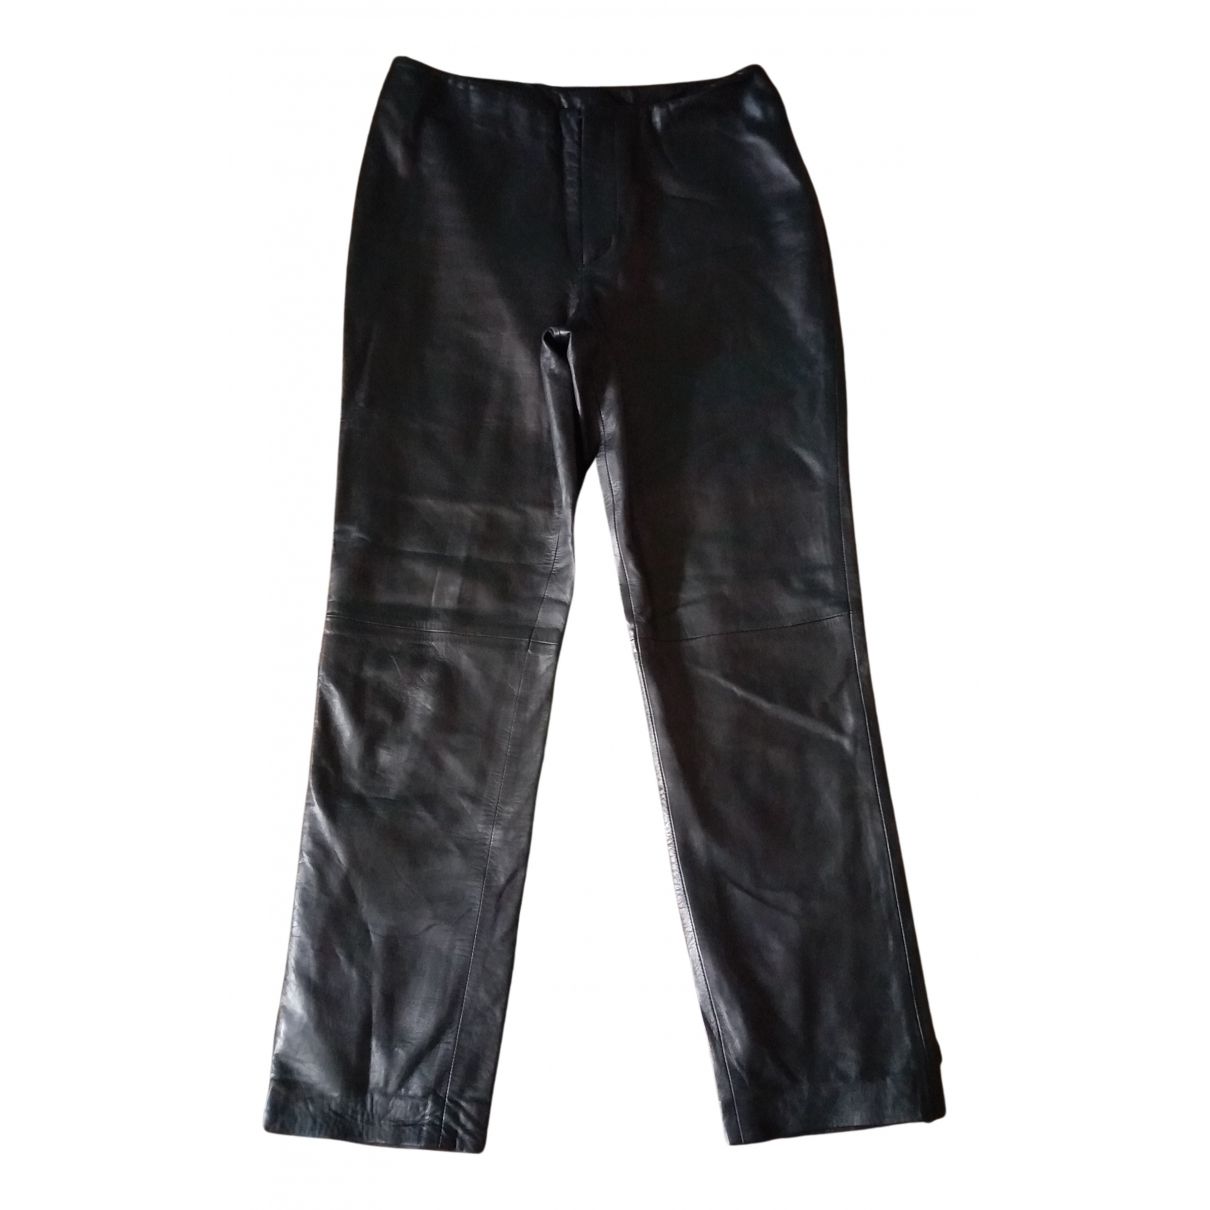 Leather trousers Lauren Ralph Lauren Black size 8 US in Leather - 14213650